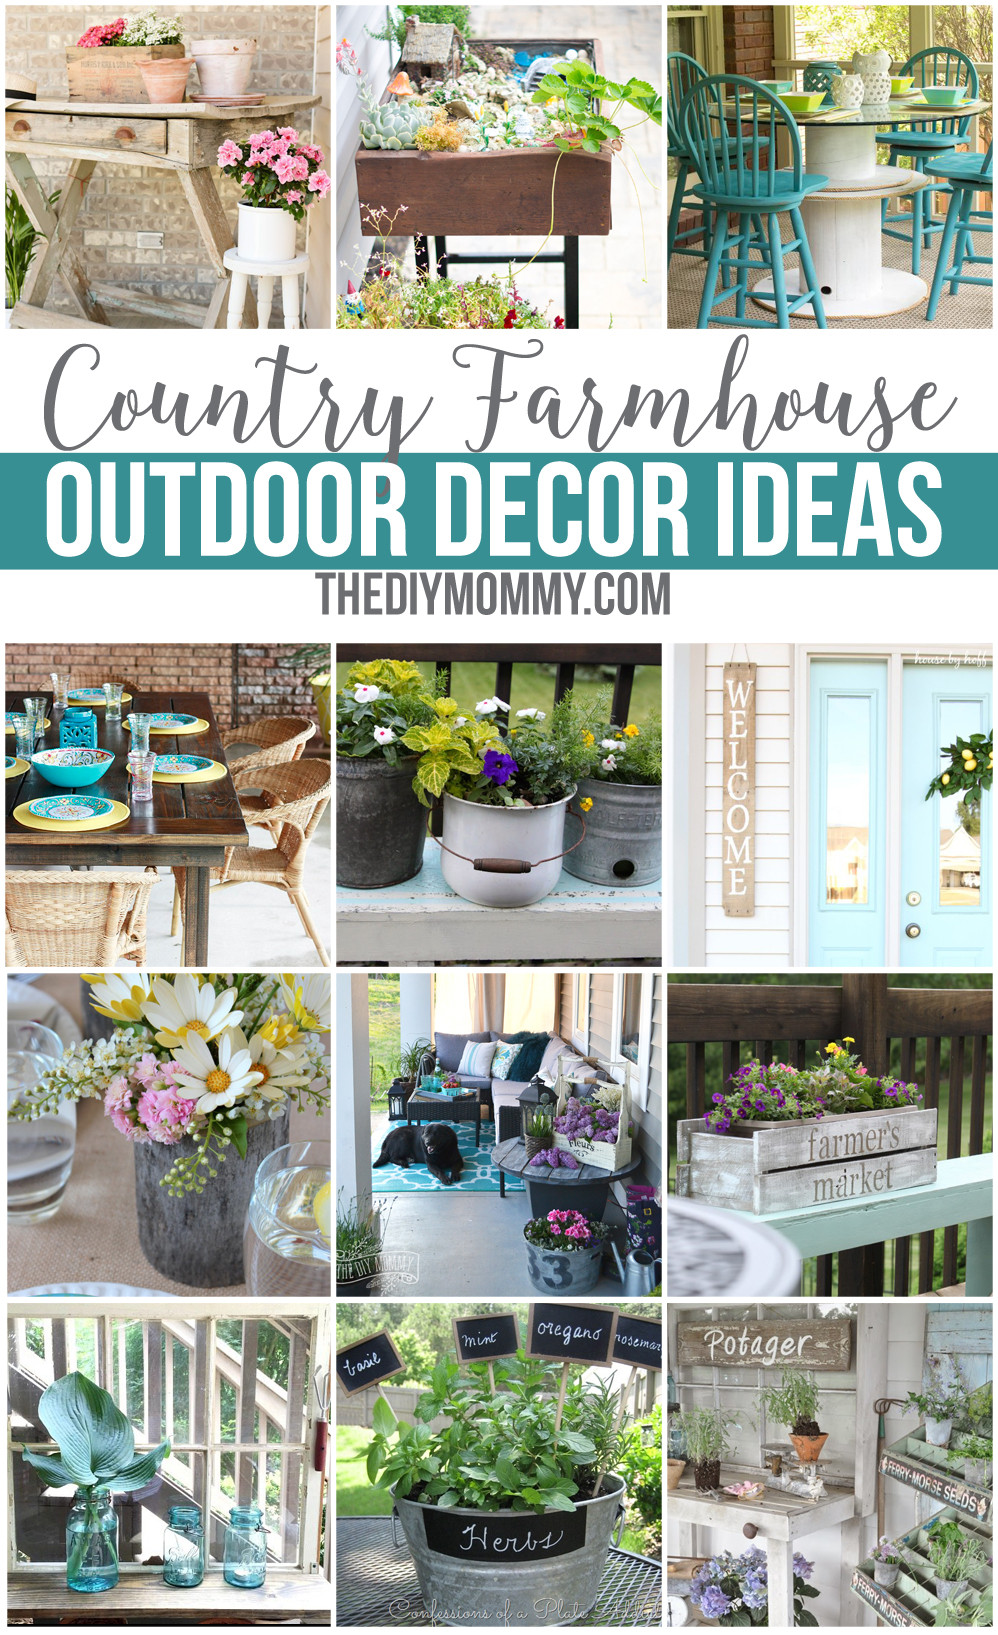 Diy Backyard Decorations
 12 Gorgeous Country Farmhouse Outdoor Décor Ideas